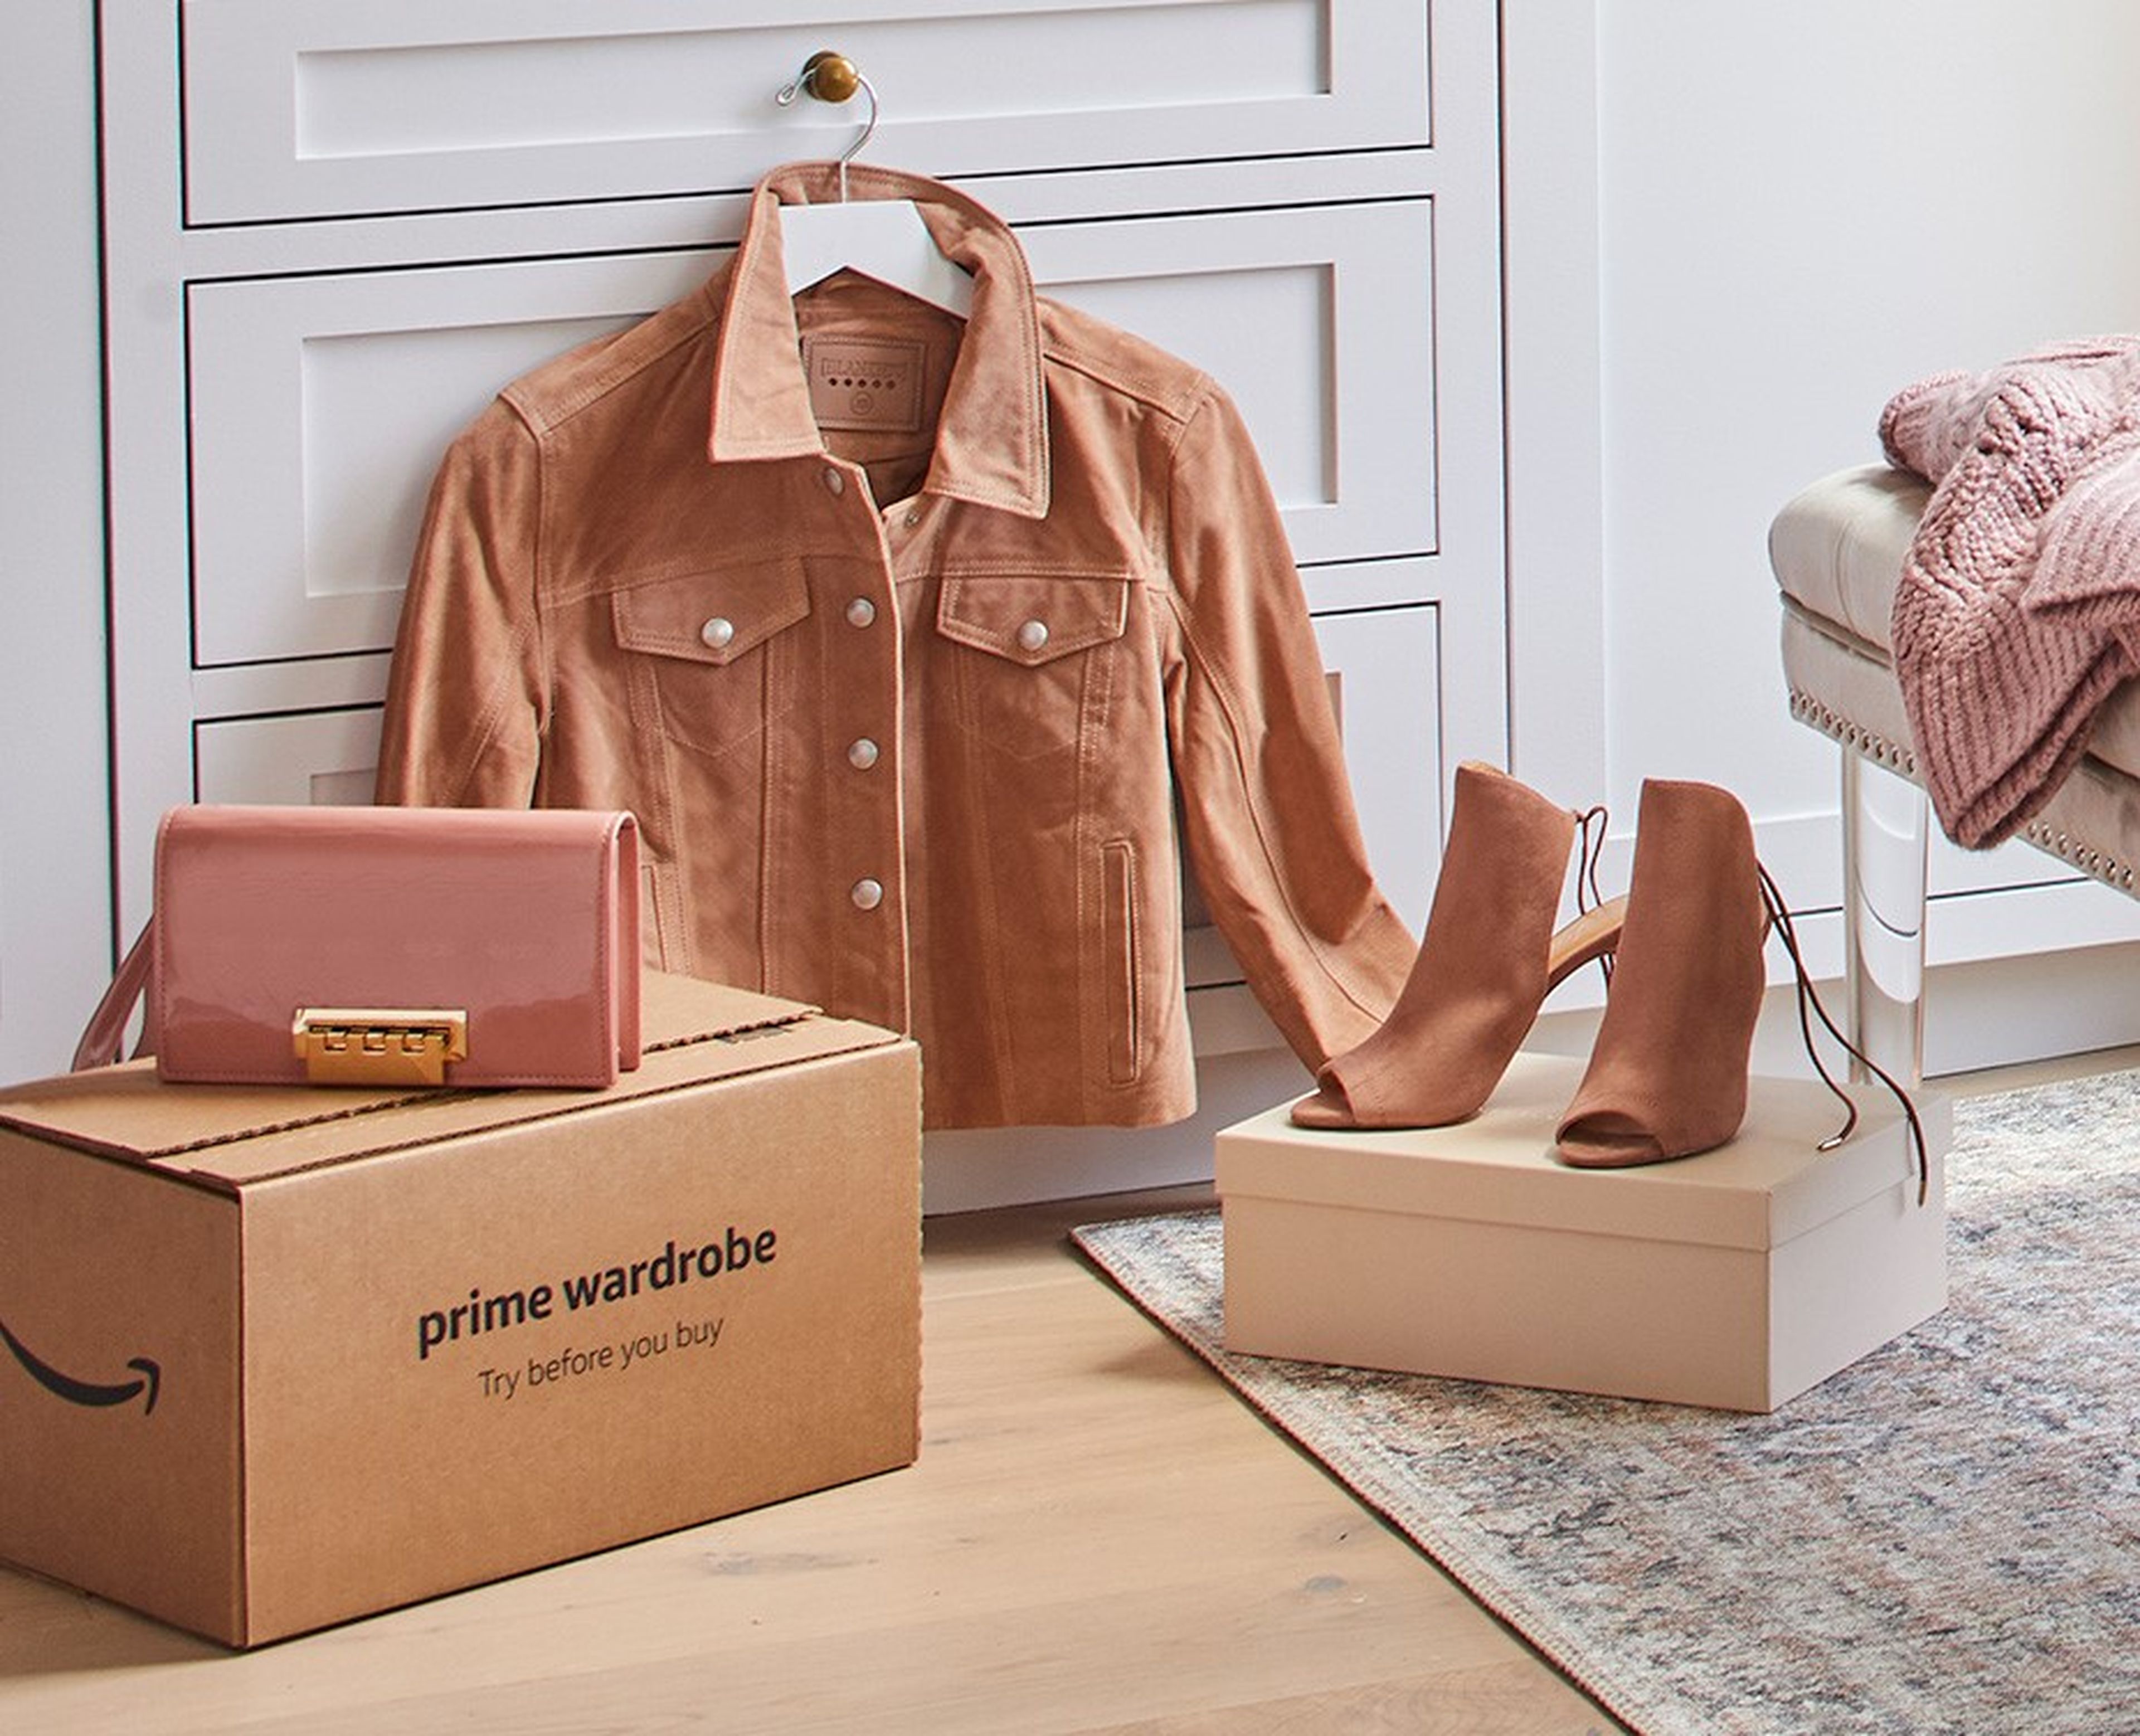 Amazon Prime Wardrobe lanza un servicio de Personal Shopper